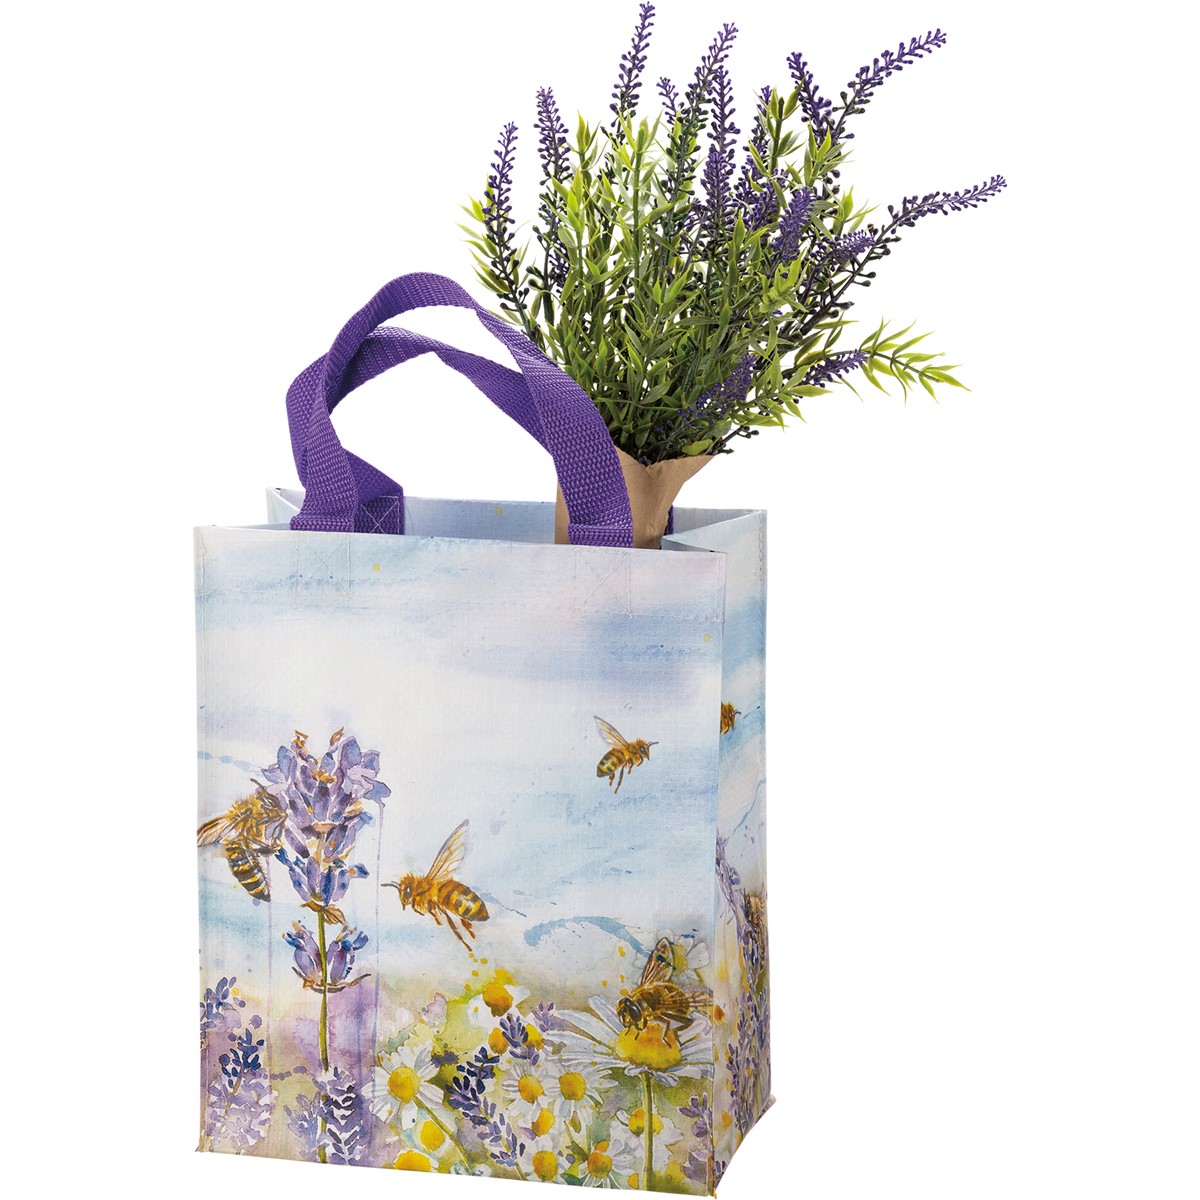 Daily Tote - Lavender - 8.75" x 10.25" x 4.75" - Post-Consumer Material, Nylon